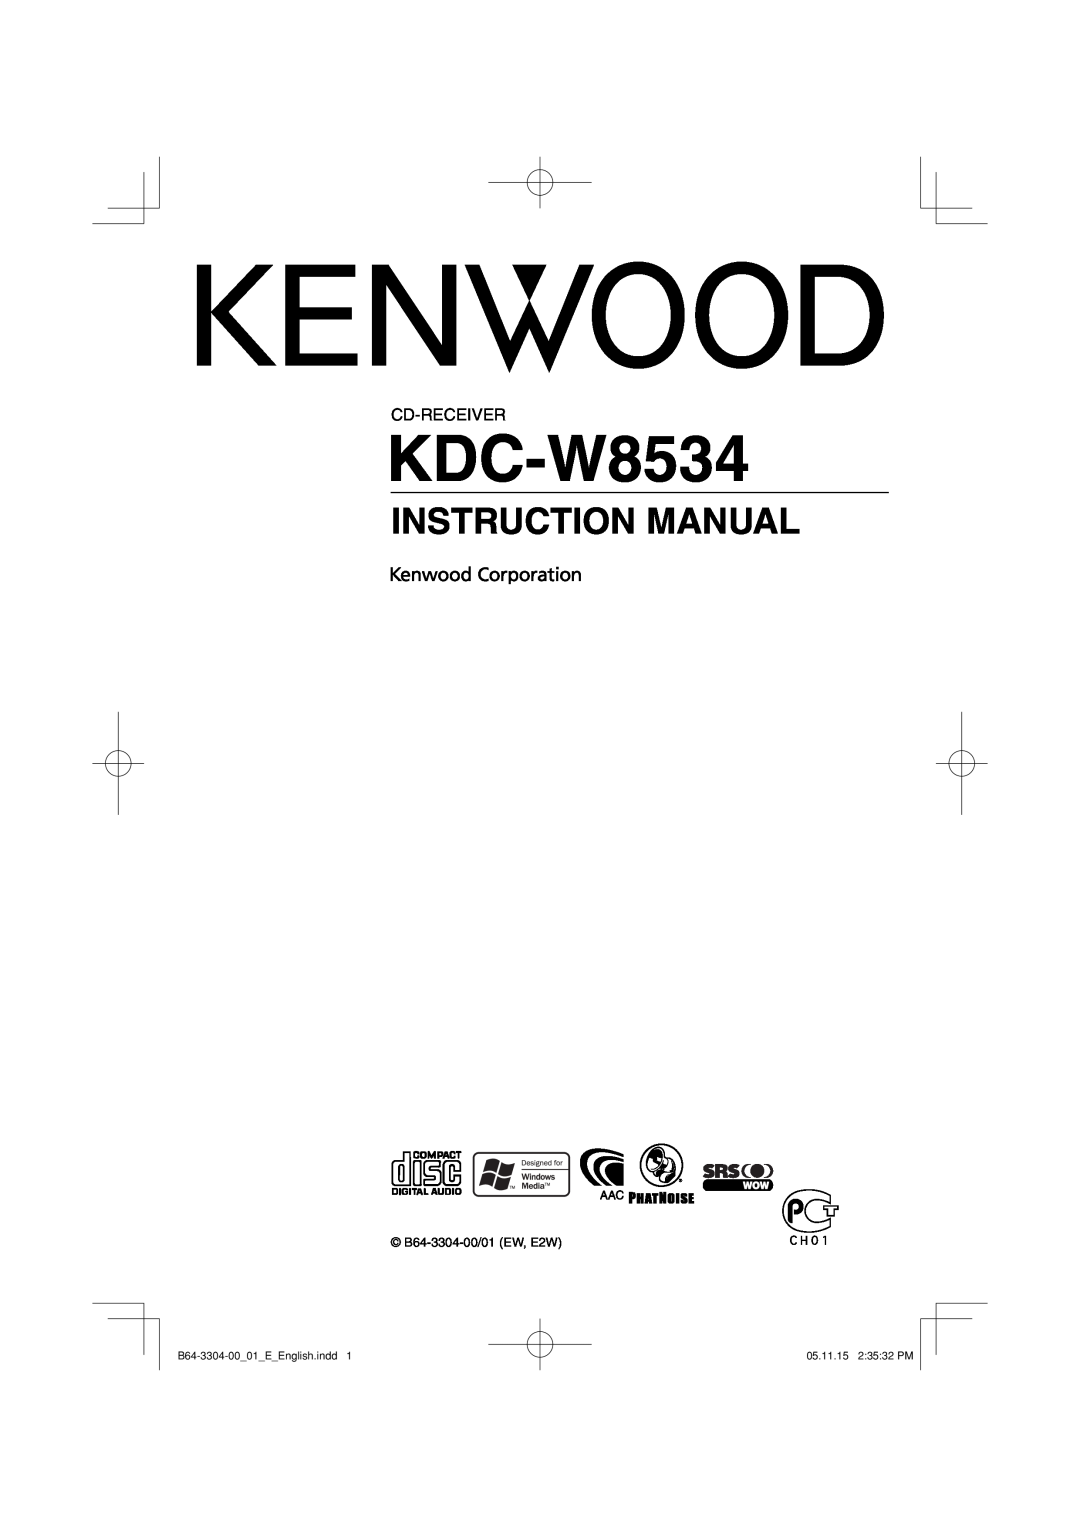 Dolby Laboratories KDC-W8534 instruction manual Instruction Manual, Cd-Receiver, B64-3304-00/01 EW, E2W, 05.11.15 23532 PM 